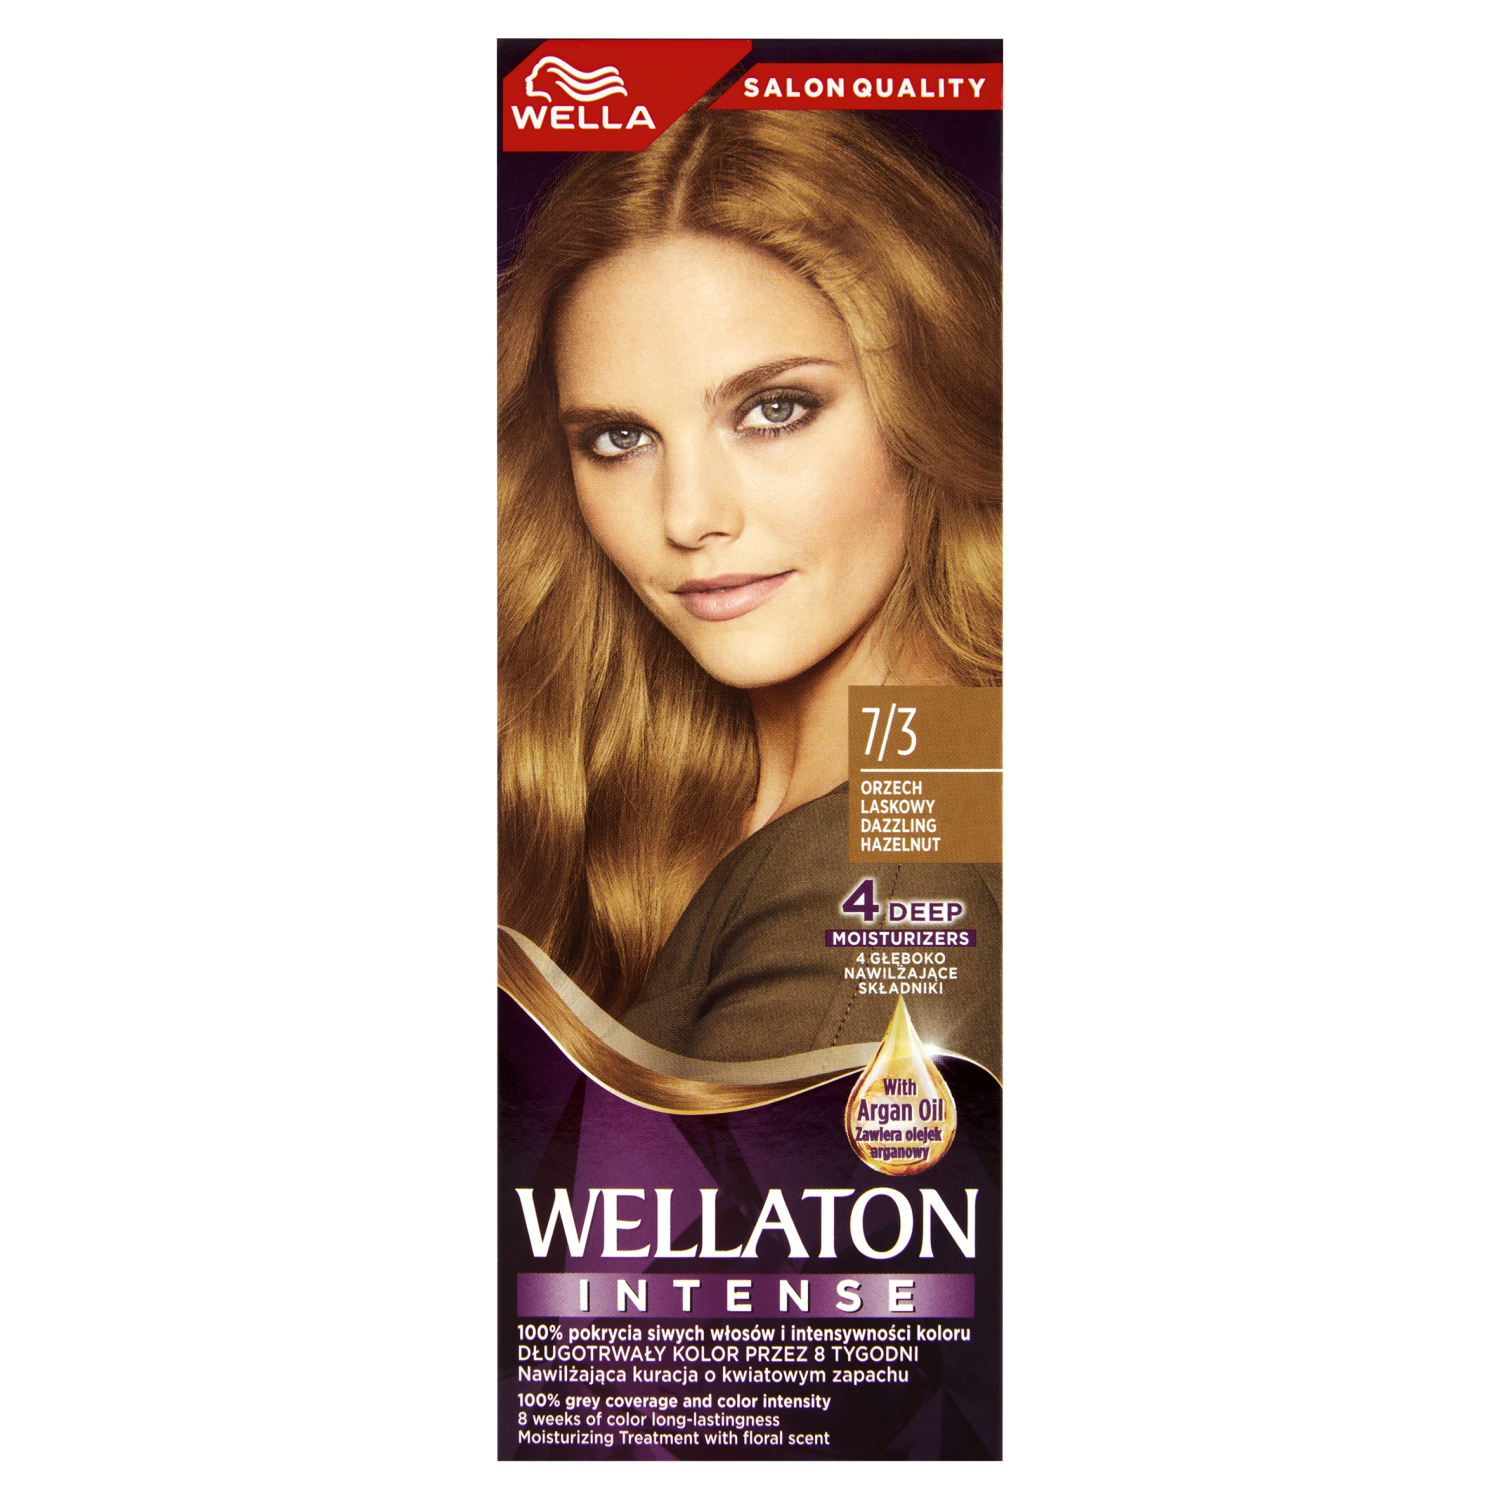 Крем-краска для волос 7/3 лесной орех wella wellaton intense Wella Ton Intense, 1 упаковка зеркало интерьерное chicago 125 лесной орех